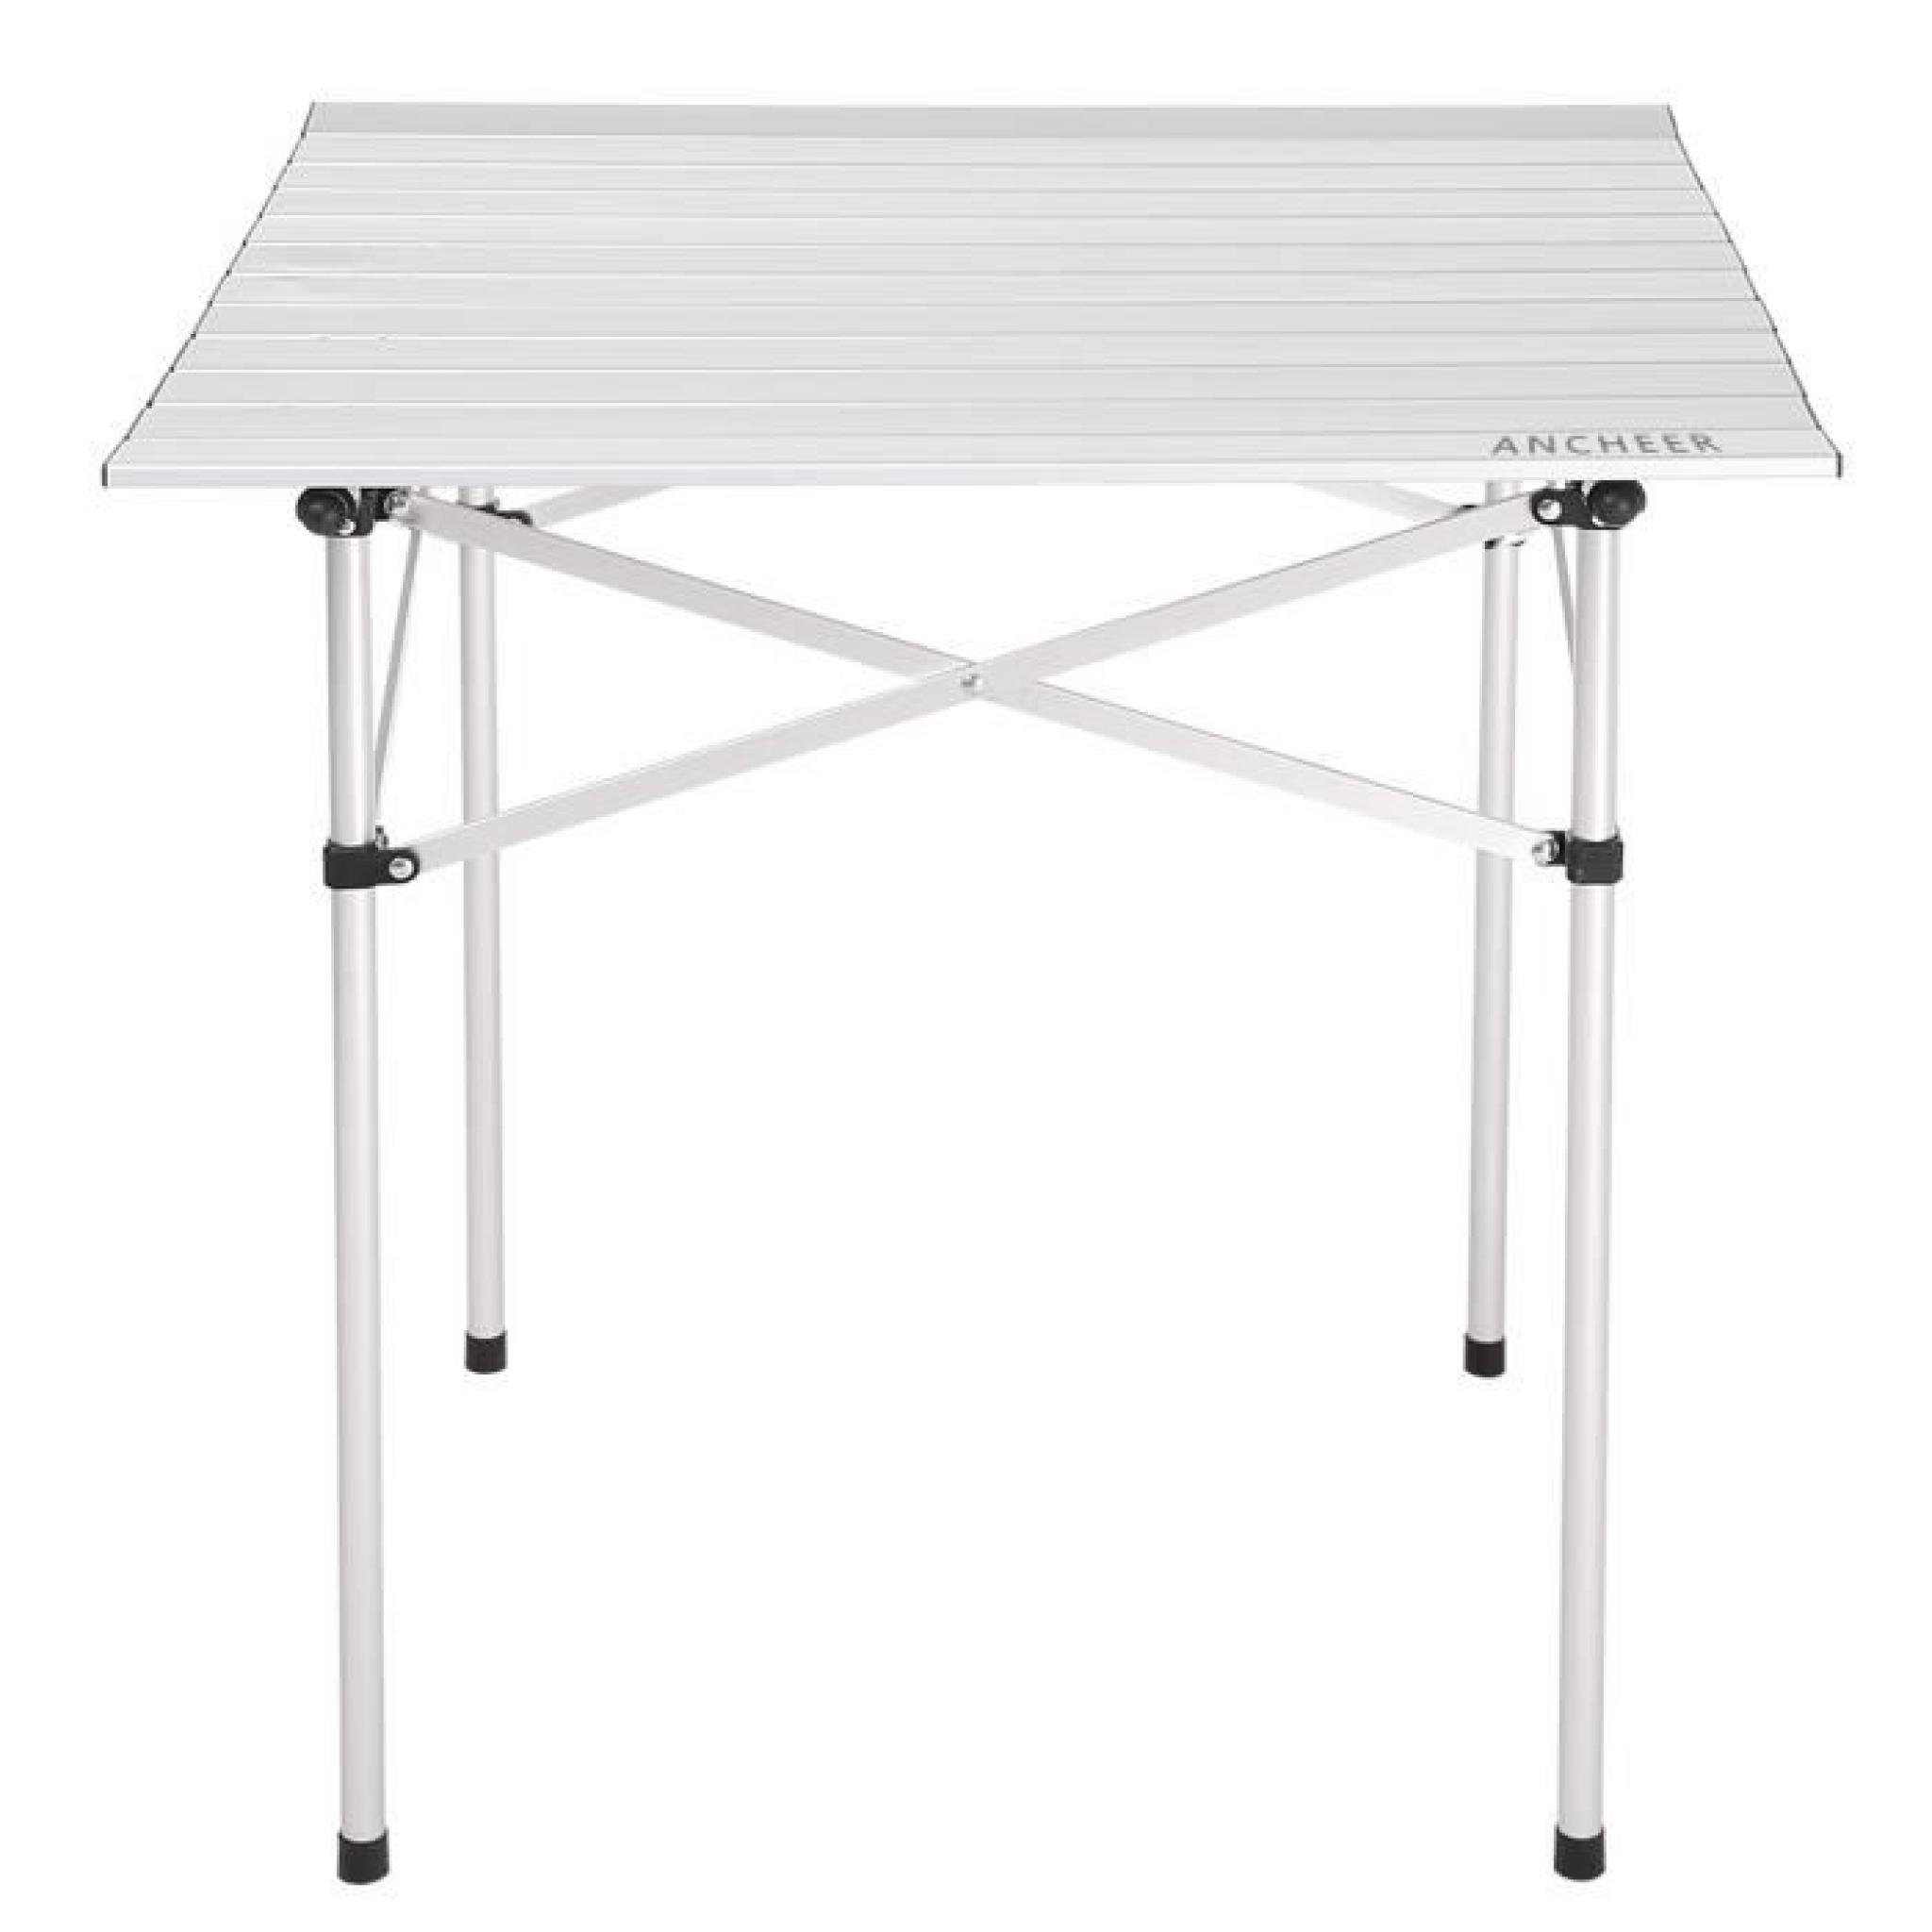 Nouvelle Ancheer table de jardin Portable aluminium retrousser Table pliante Camping pique-nique  pas cher